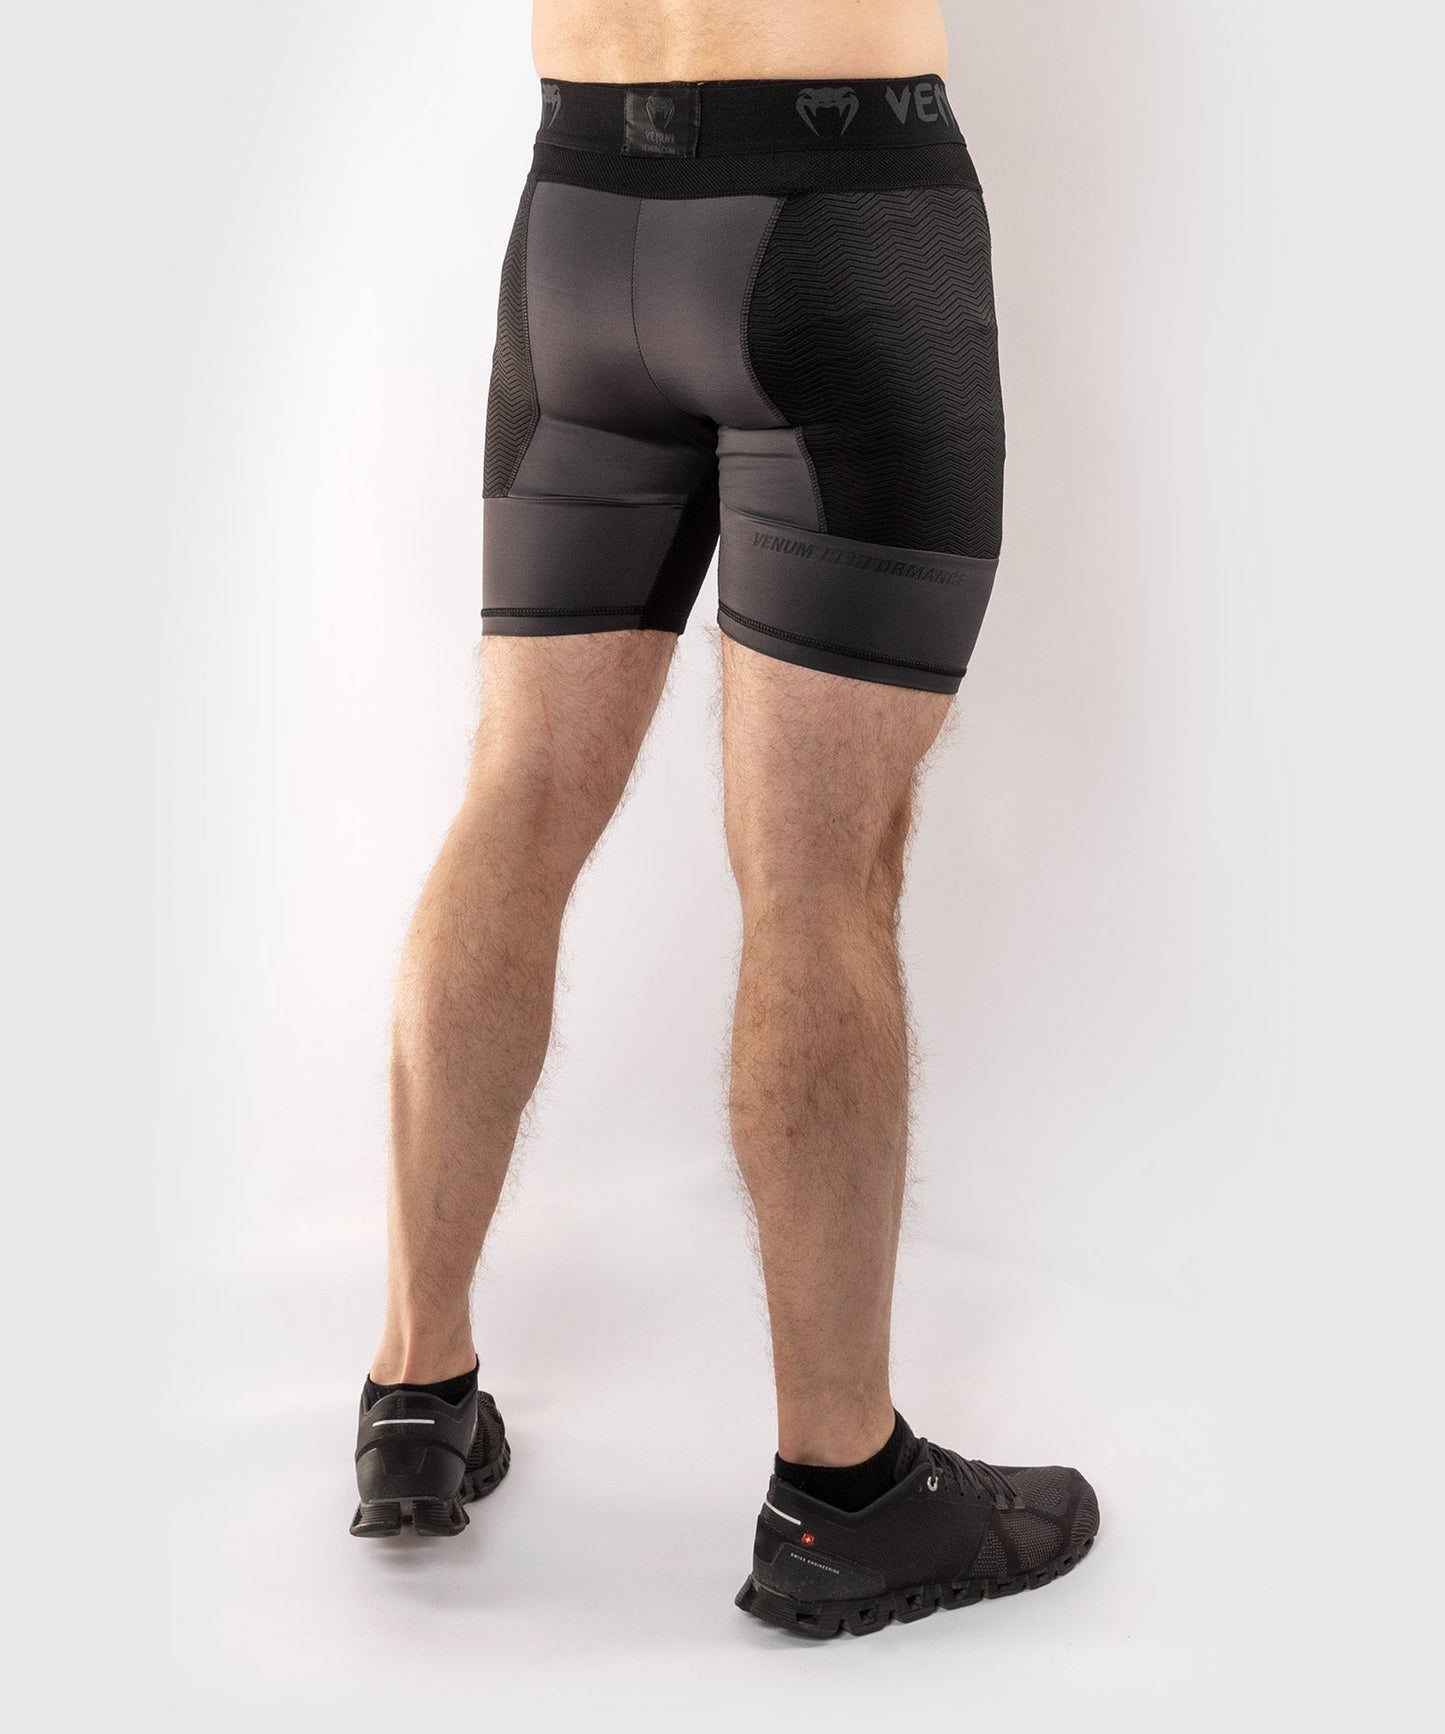 Venum G-Fit Compression Shorts - Grey/Black